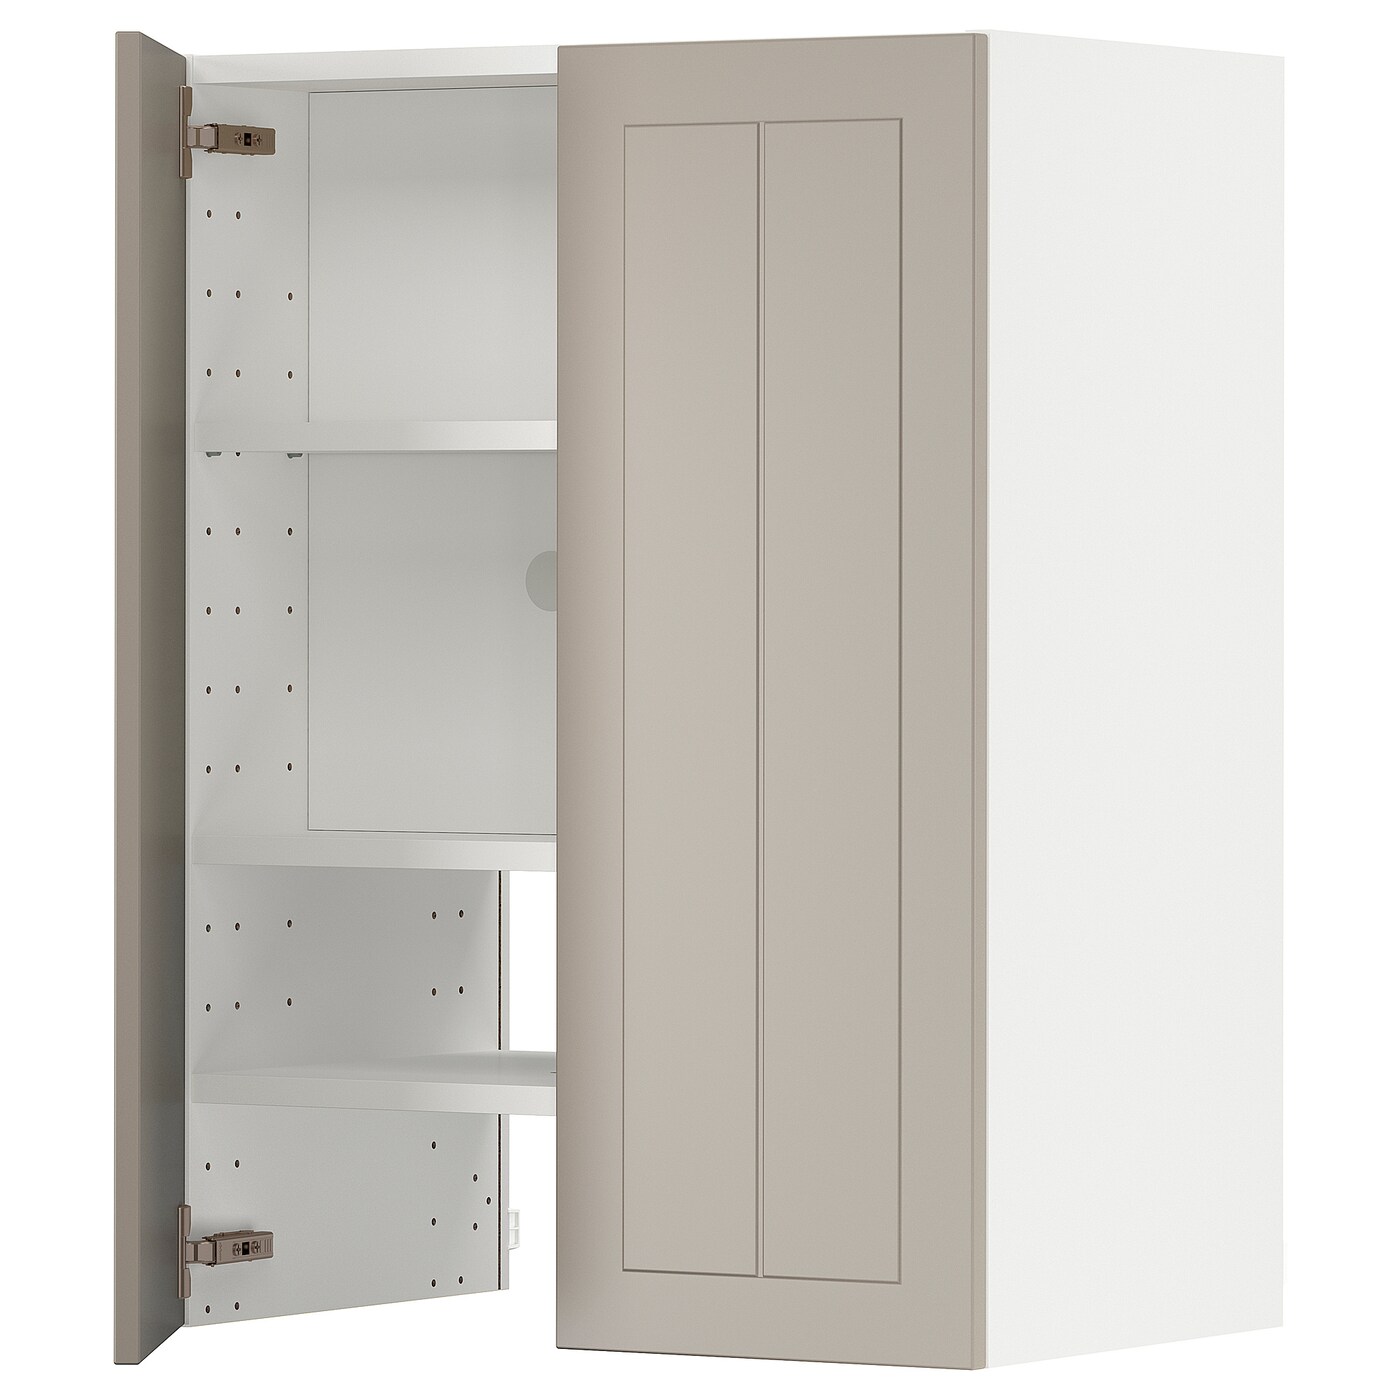 METOD Навесной шкаф - METOD IKEA/ МЕТОД ИКЕА, 60х80 см, белый/светло-коричневый